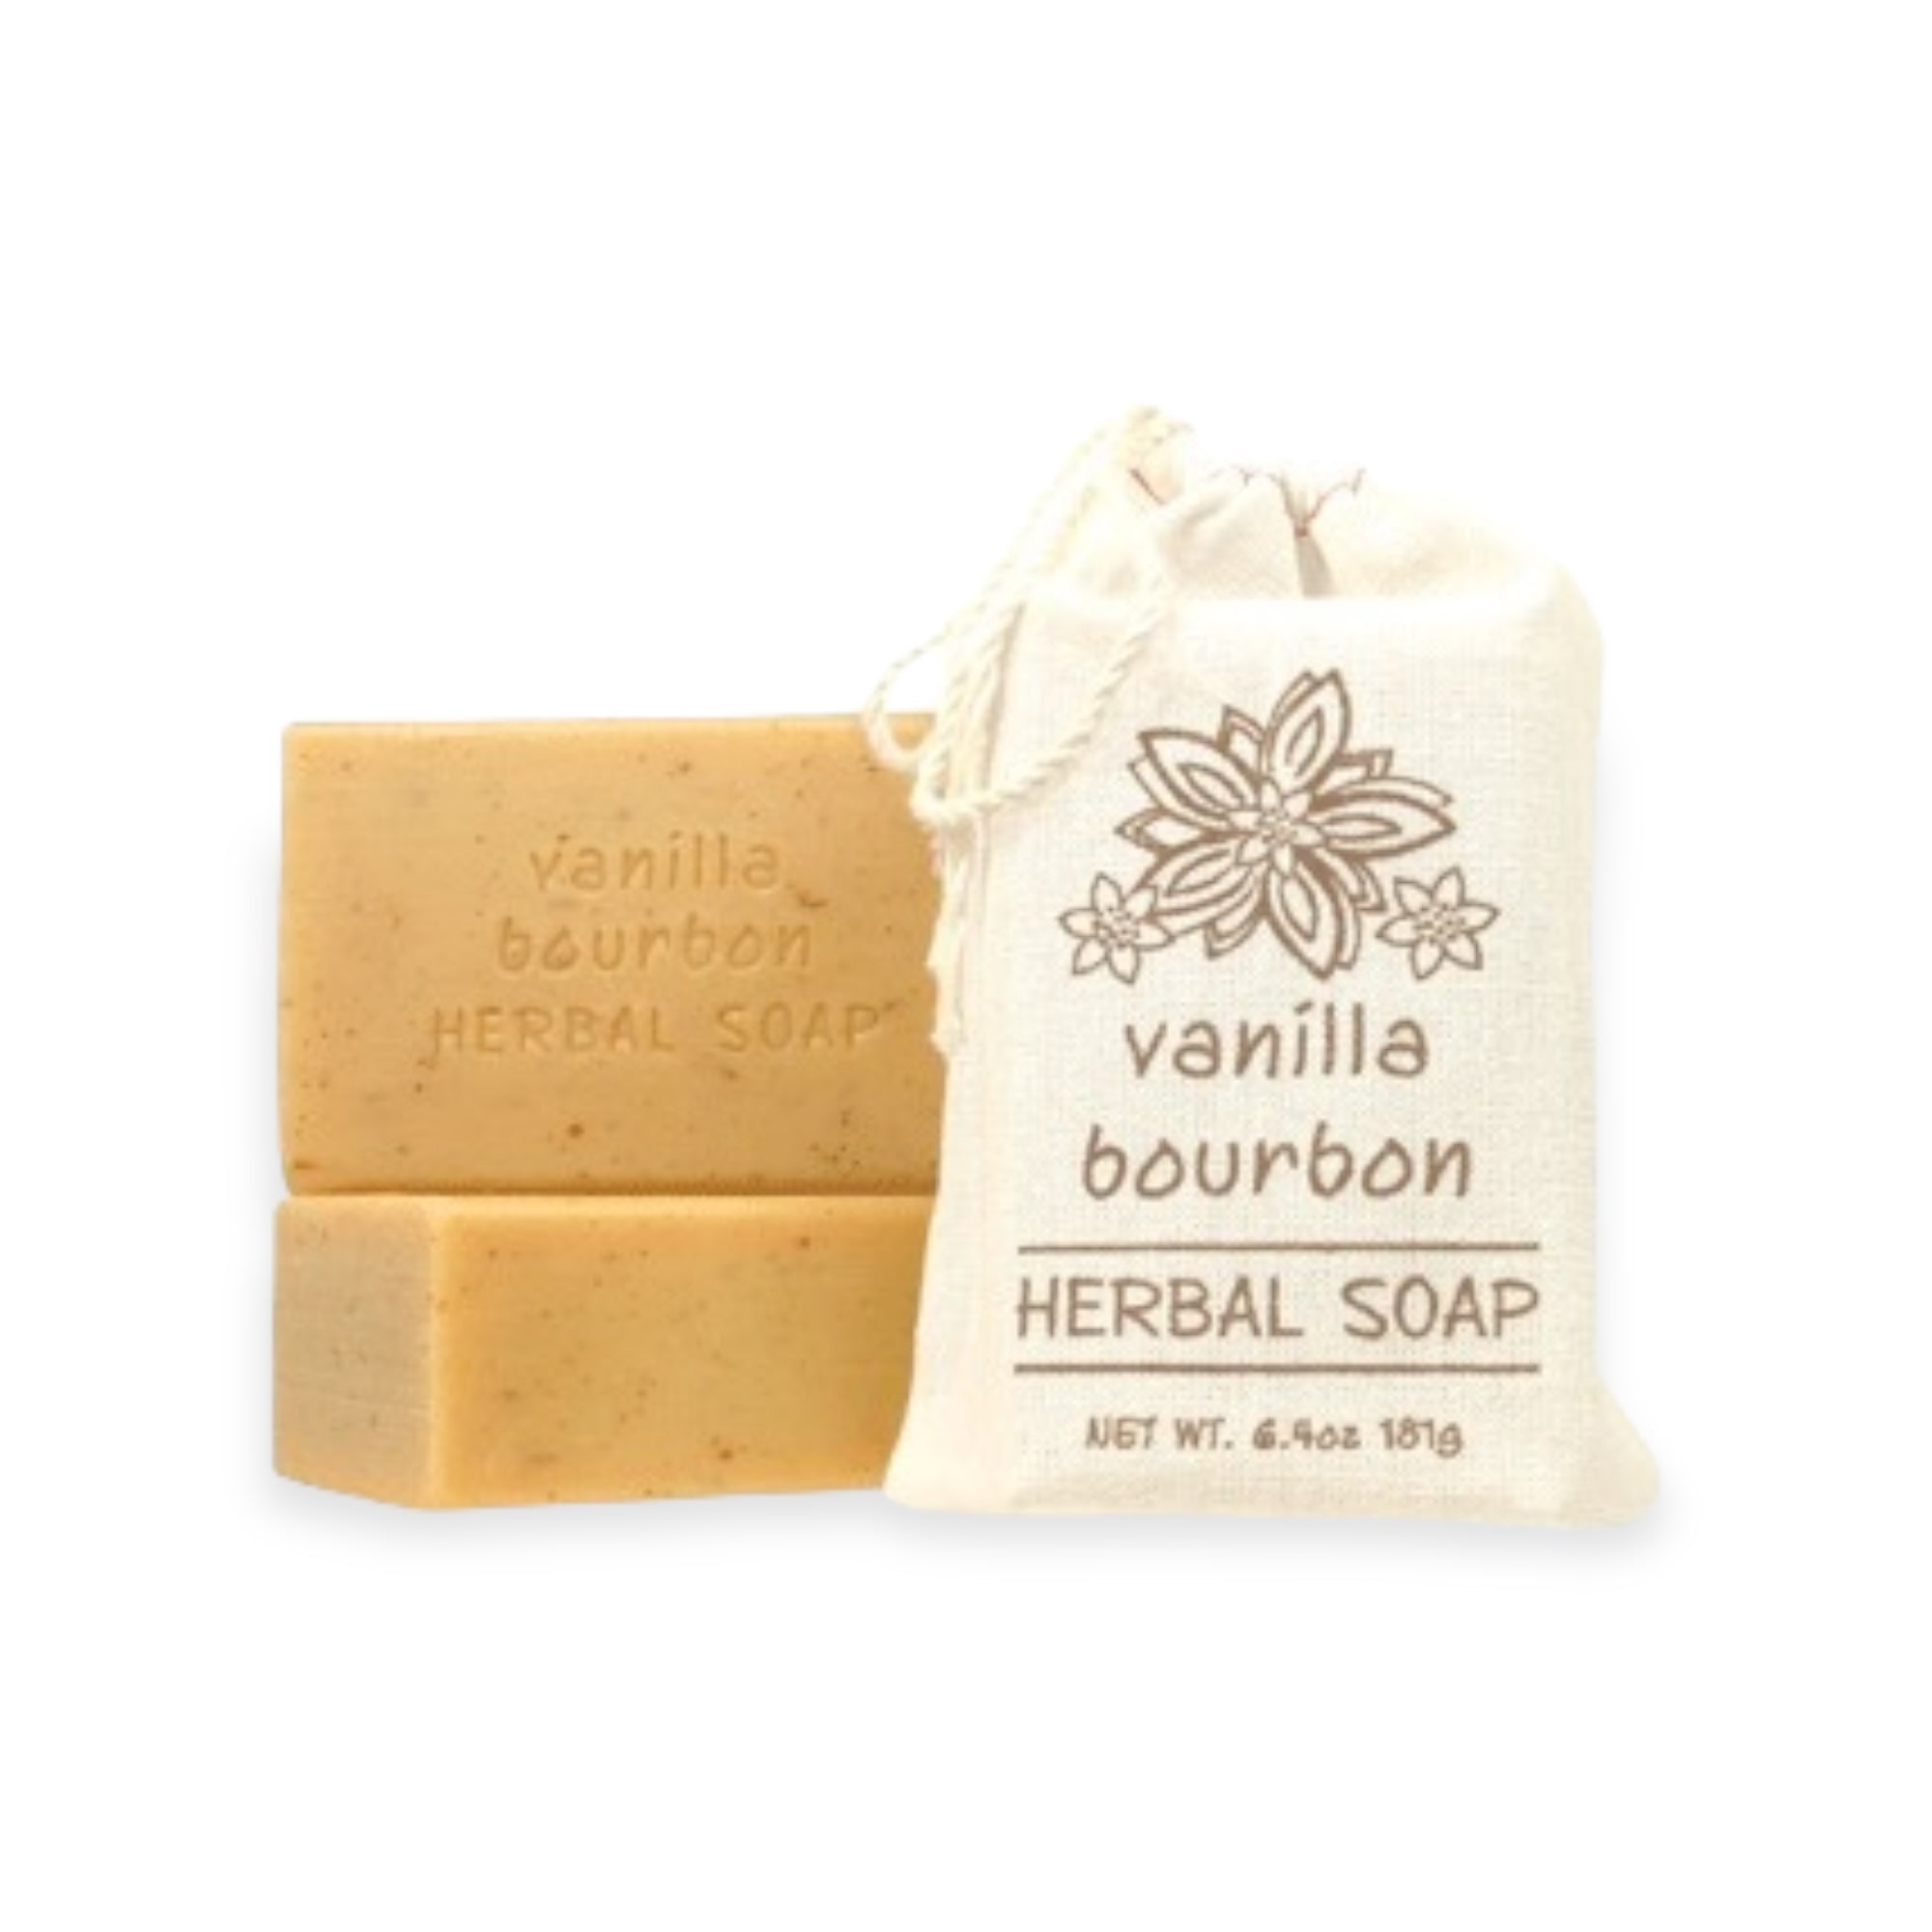 Vanilla Bourbon Herbal Soap by Greenwich Bay Trading Co.